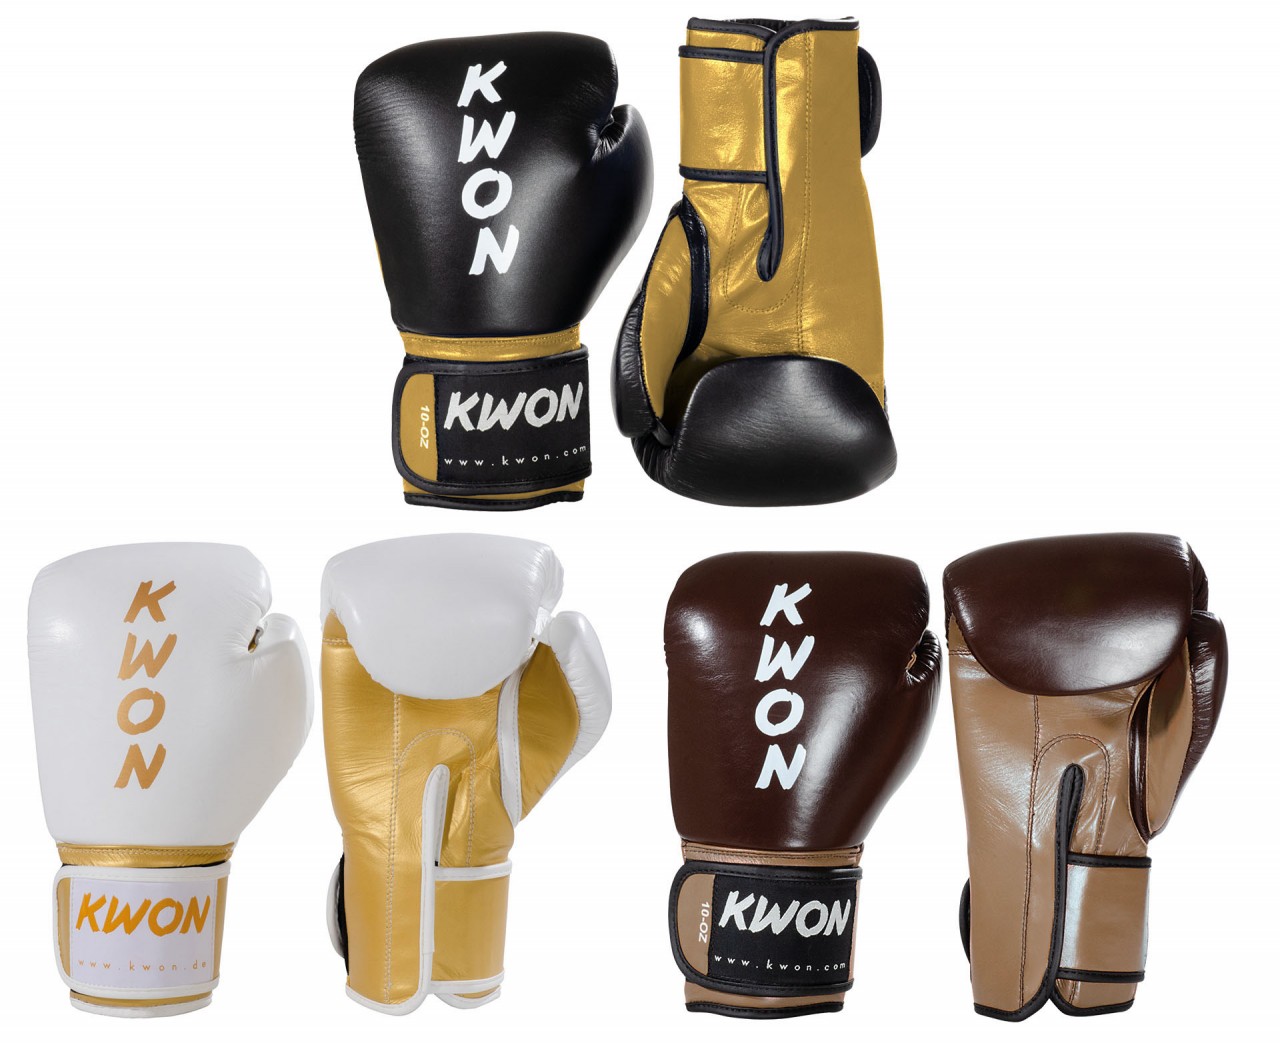 Kwon Leather KO Champ Boxing Glove Boxing Gloves 10 12 16 